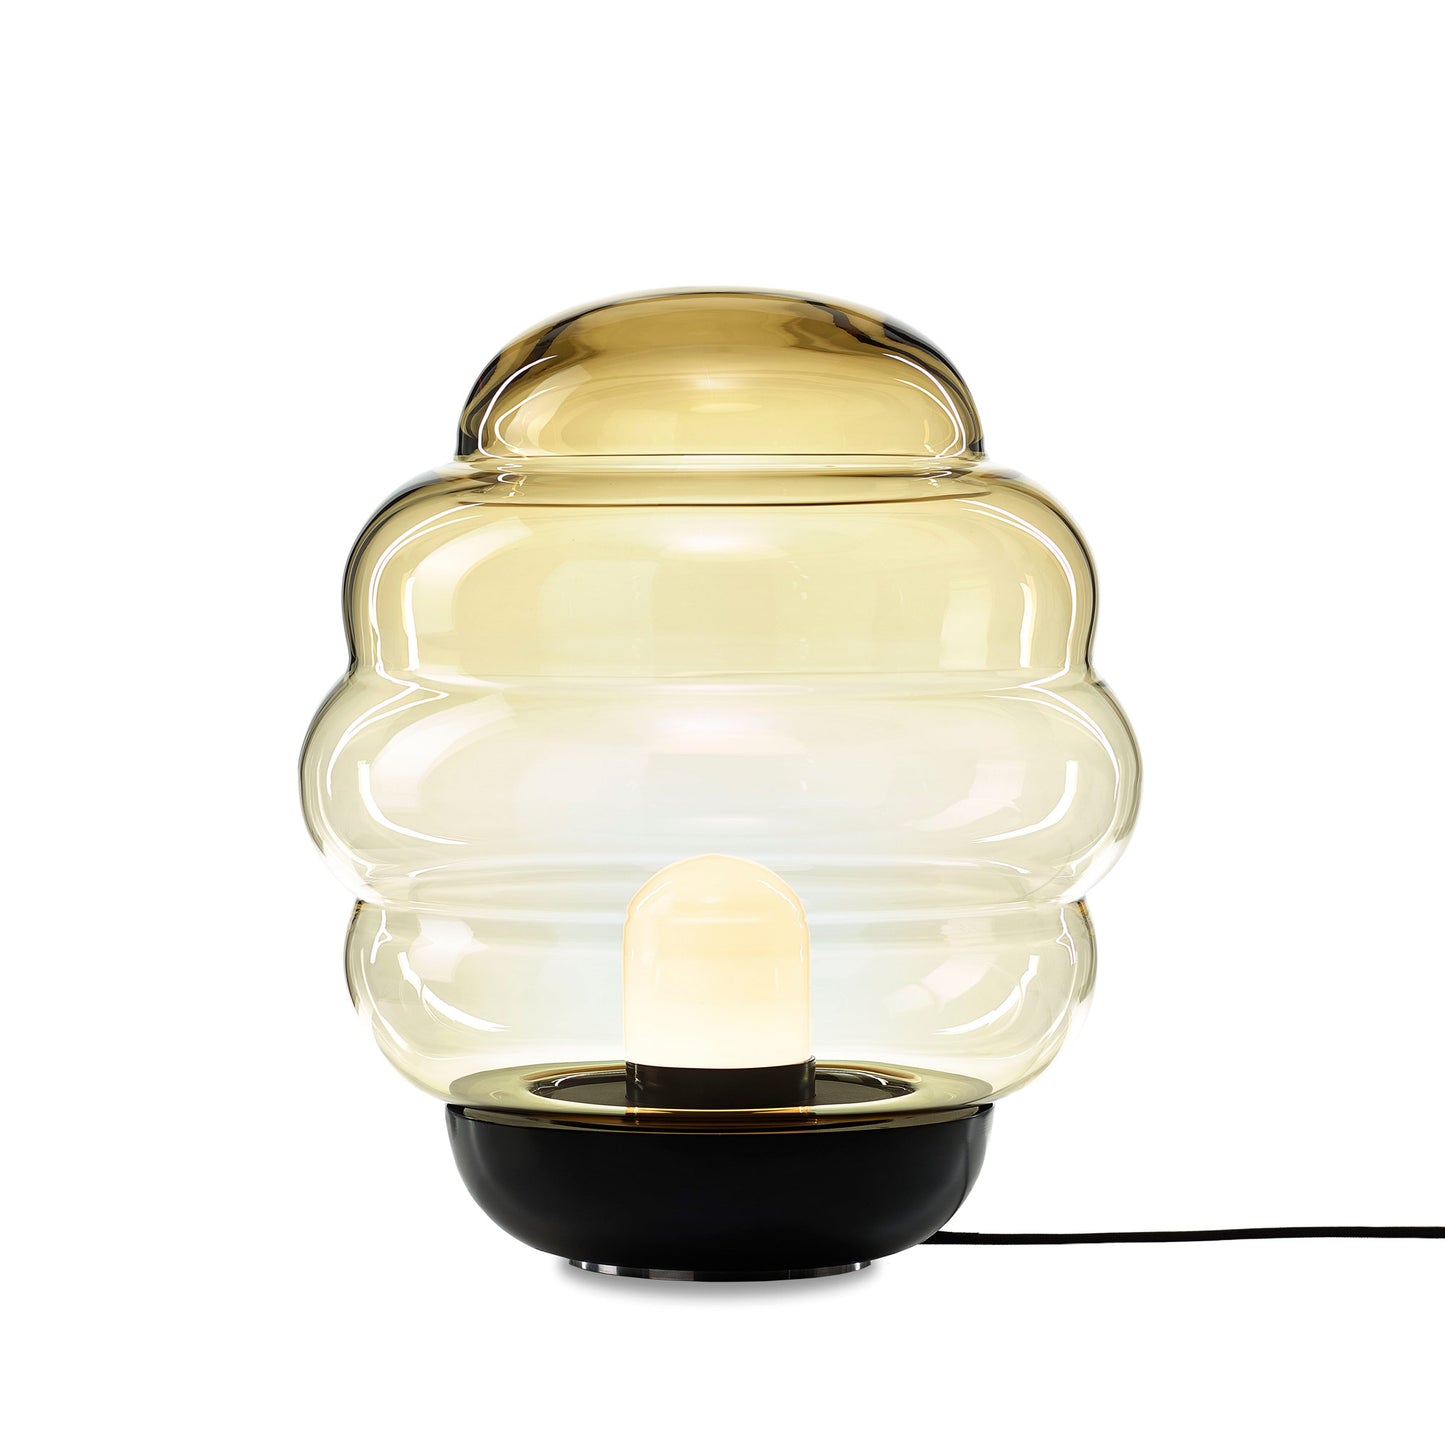 BOMMA - BLIMP FLOOR LAMP MEDIUM - from $3,378.50